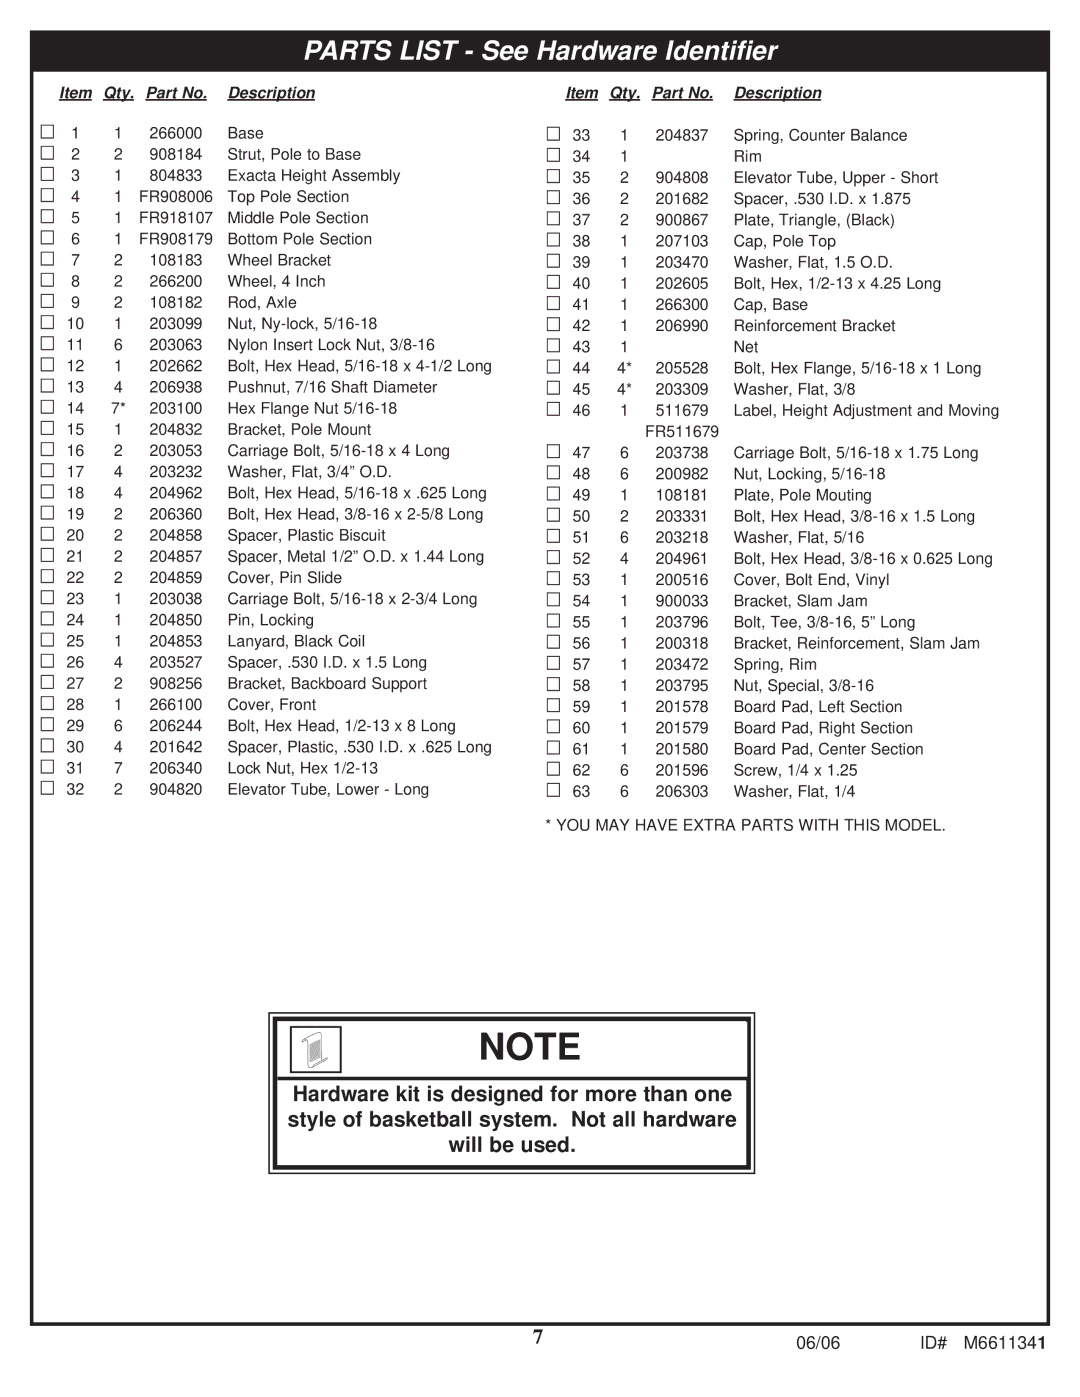 Spalding M6611341 manual Parts List See Hardware Identifier 